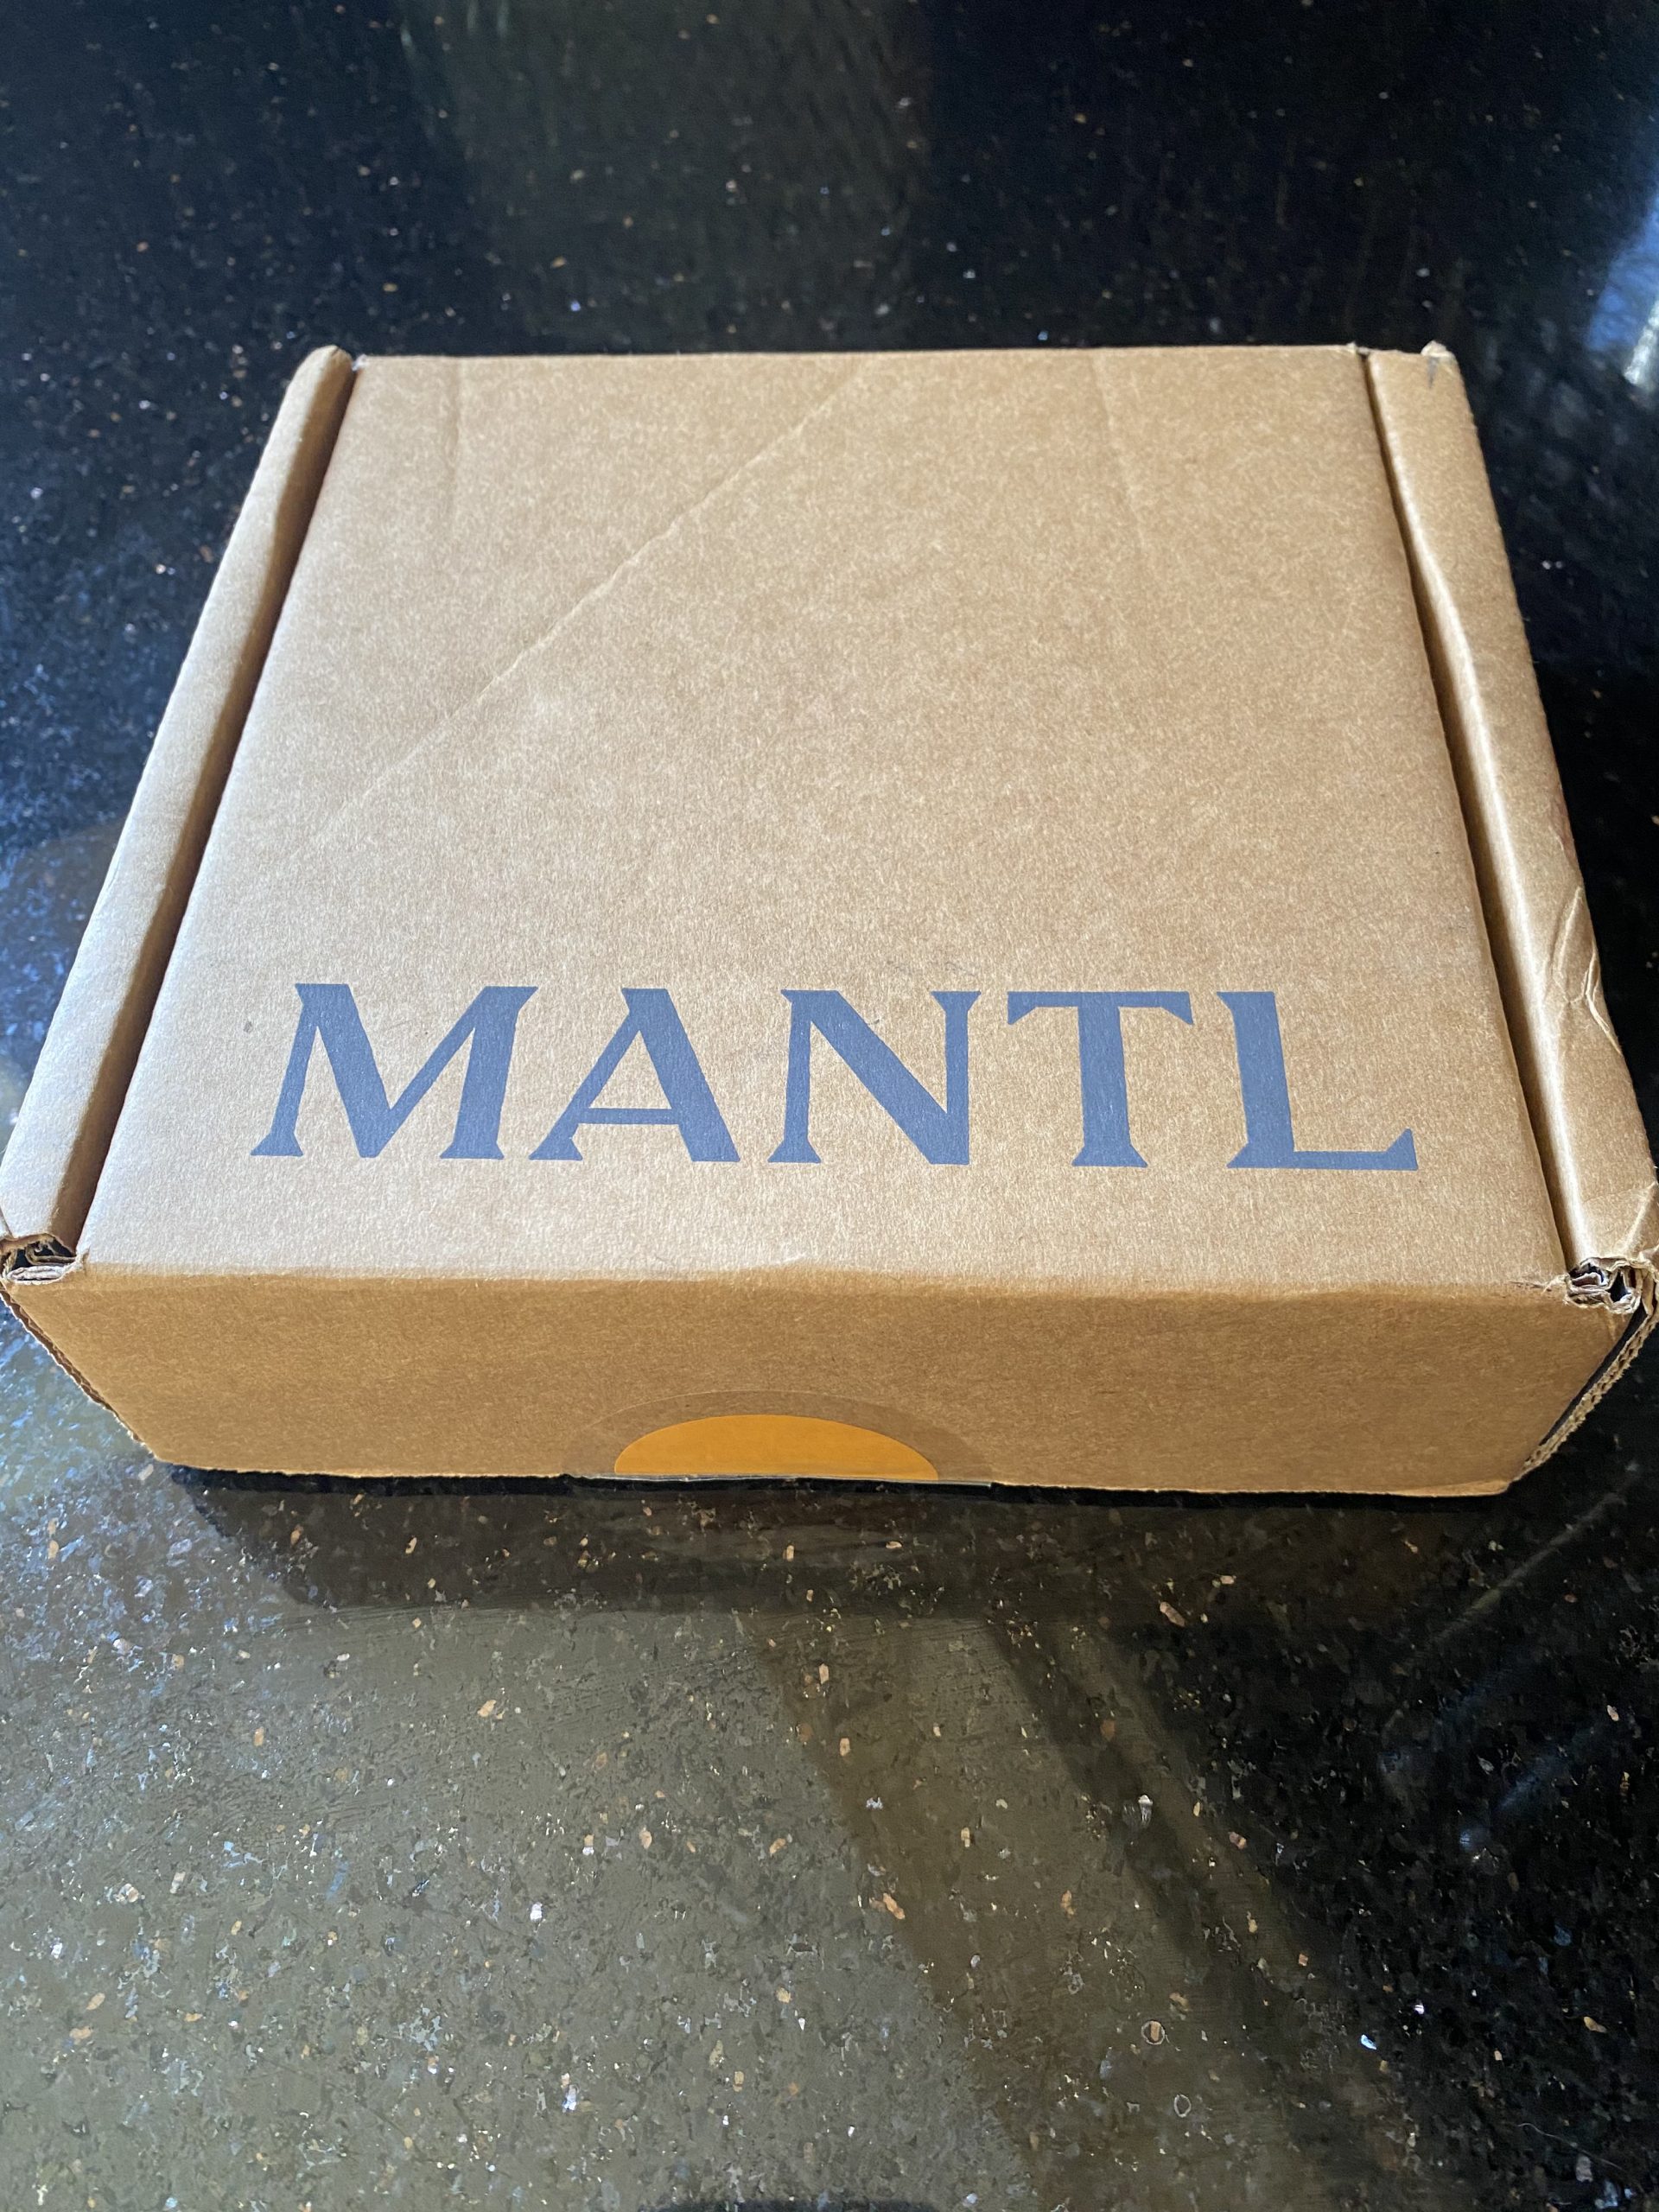 Mantl box